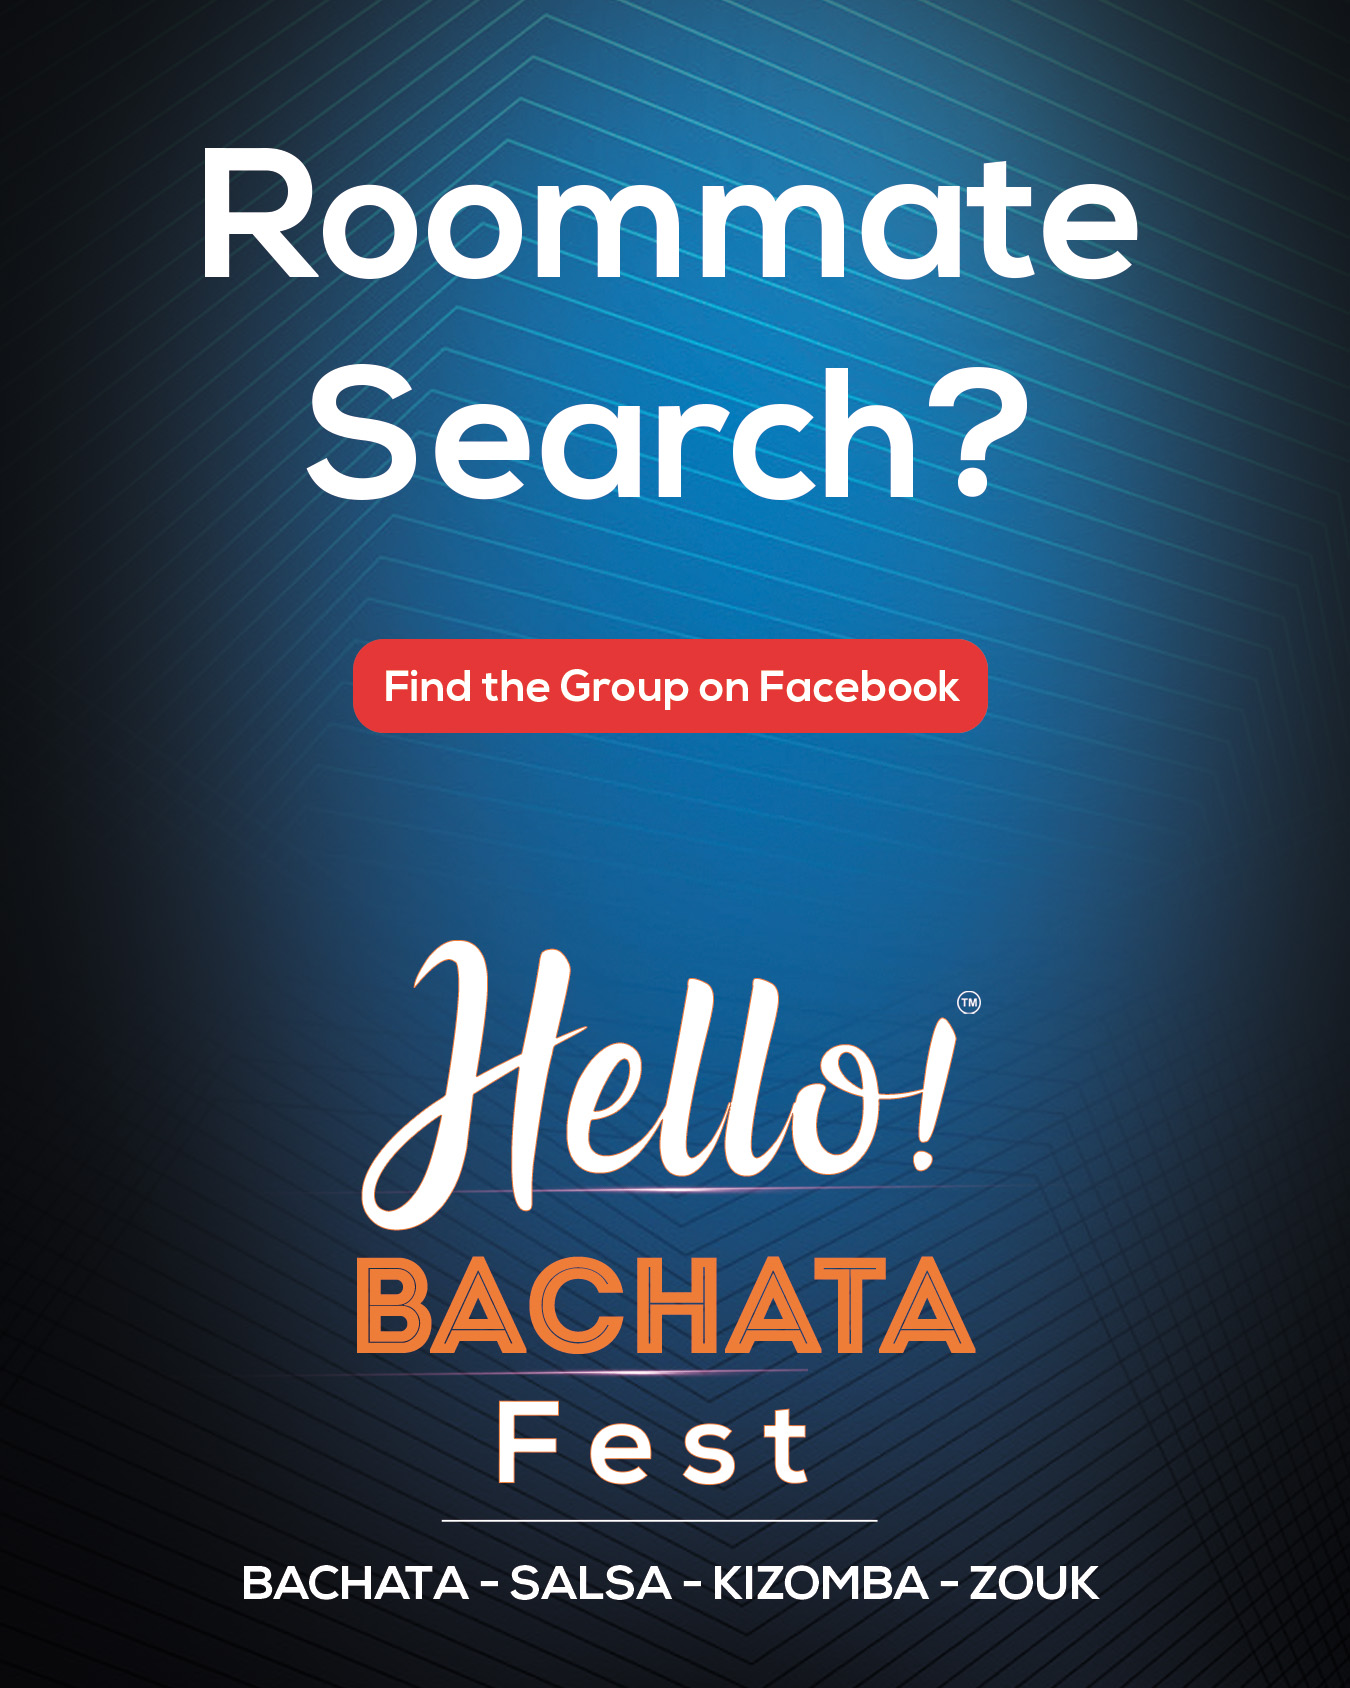 Hello Bachata Fest Roommate Search